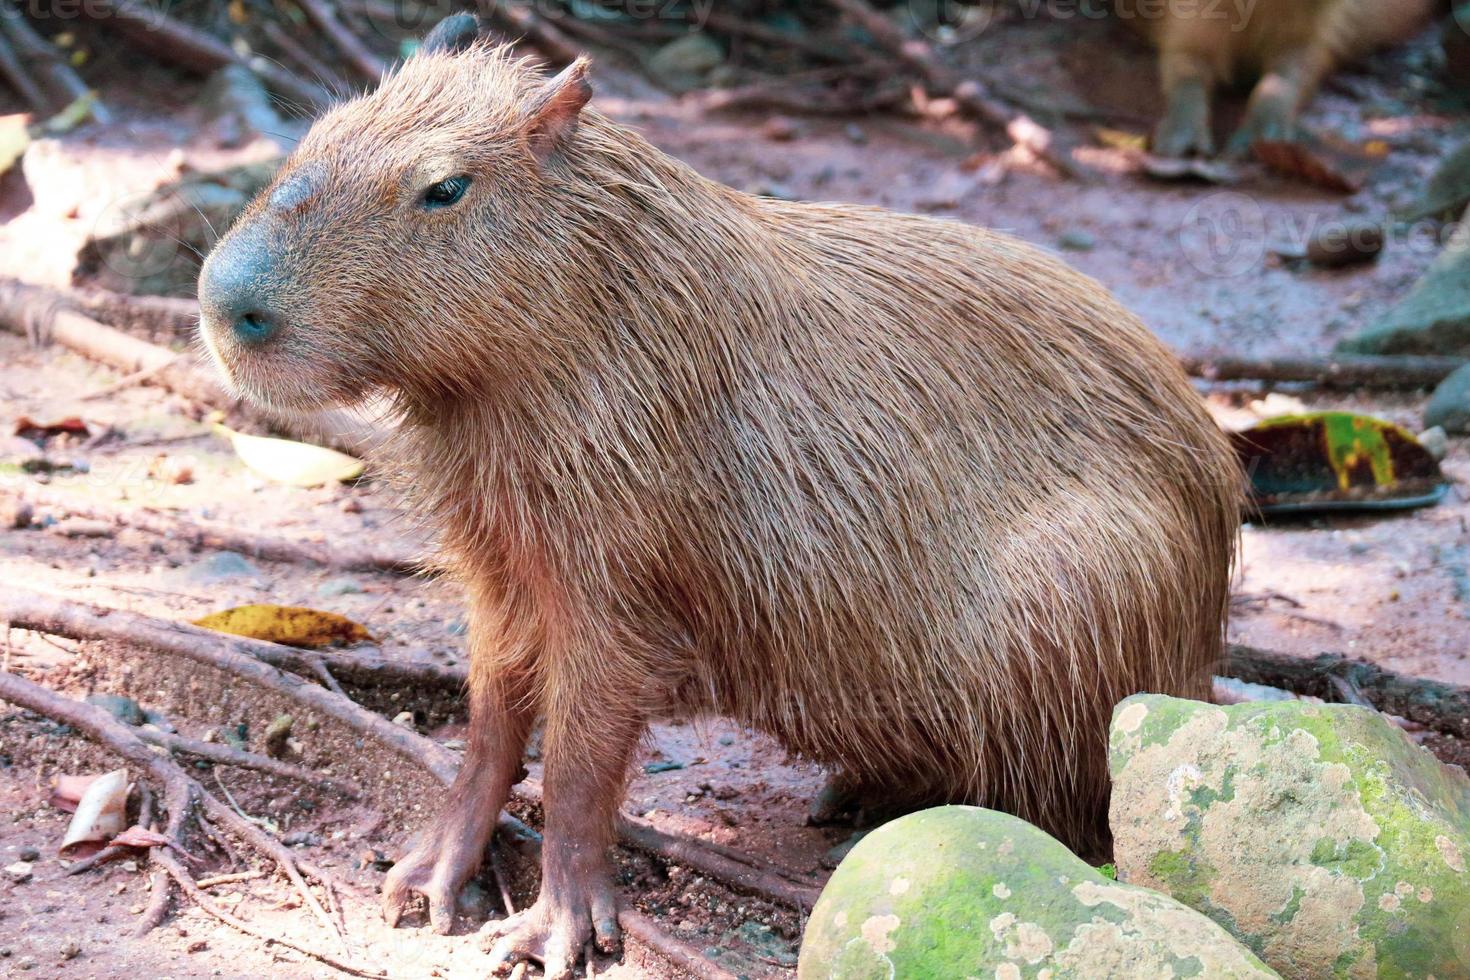 capybara hydrochoerus hydrochaeris im ragunan zoo, jakarta. foto